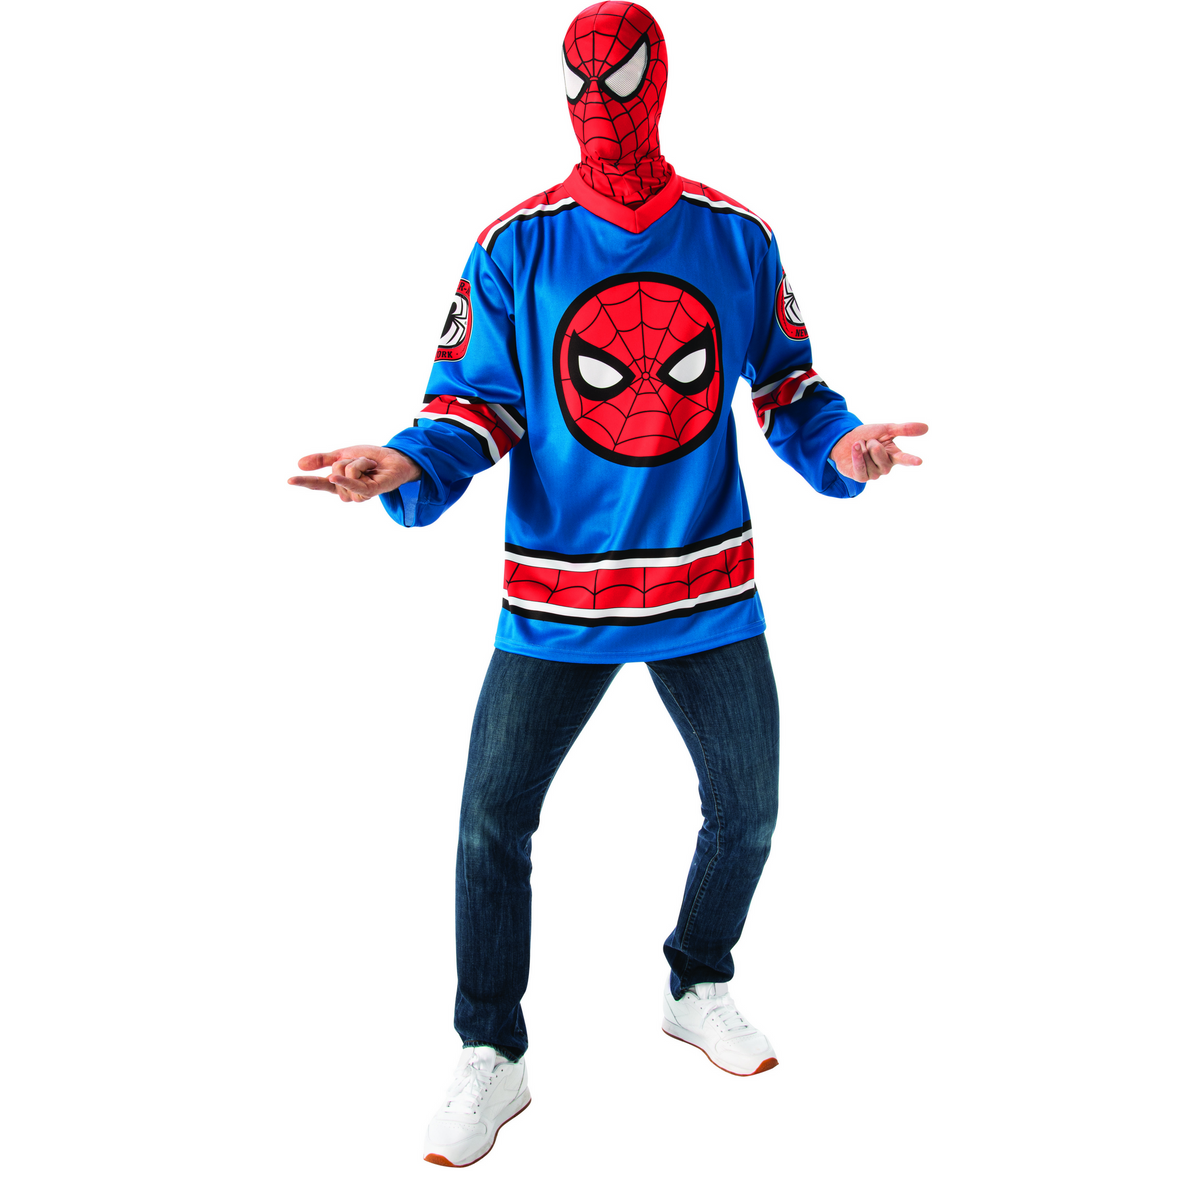 Marvel Universe Spider-Man Adult Costume Jersey Top & Mask